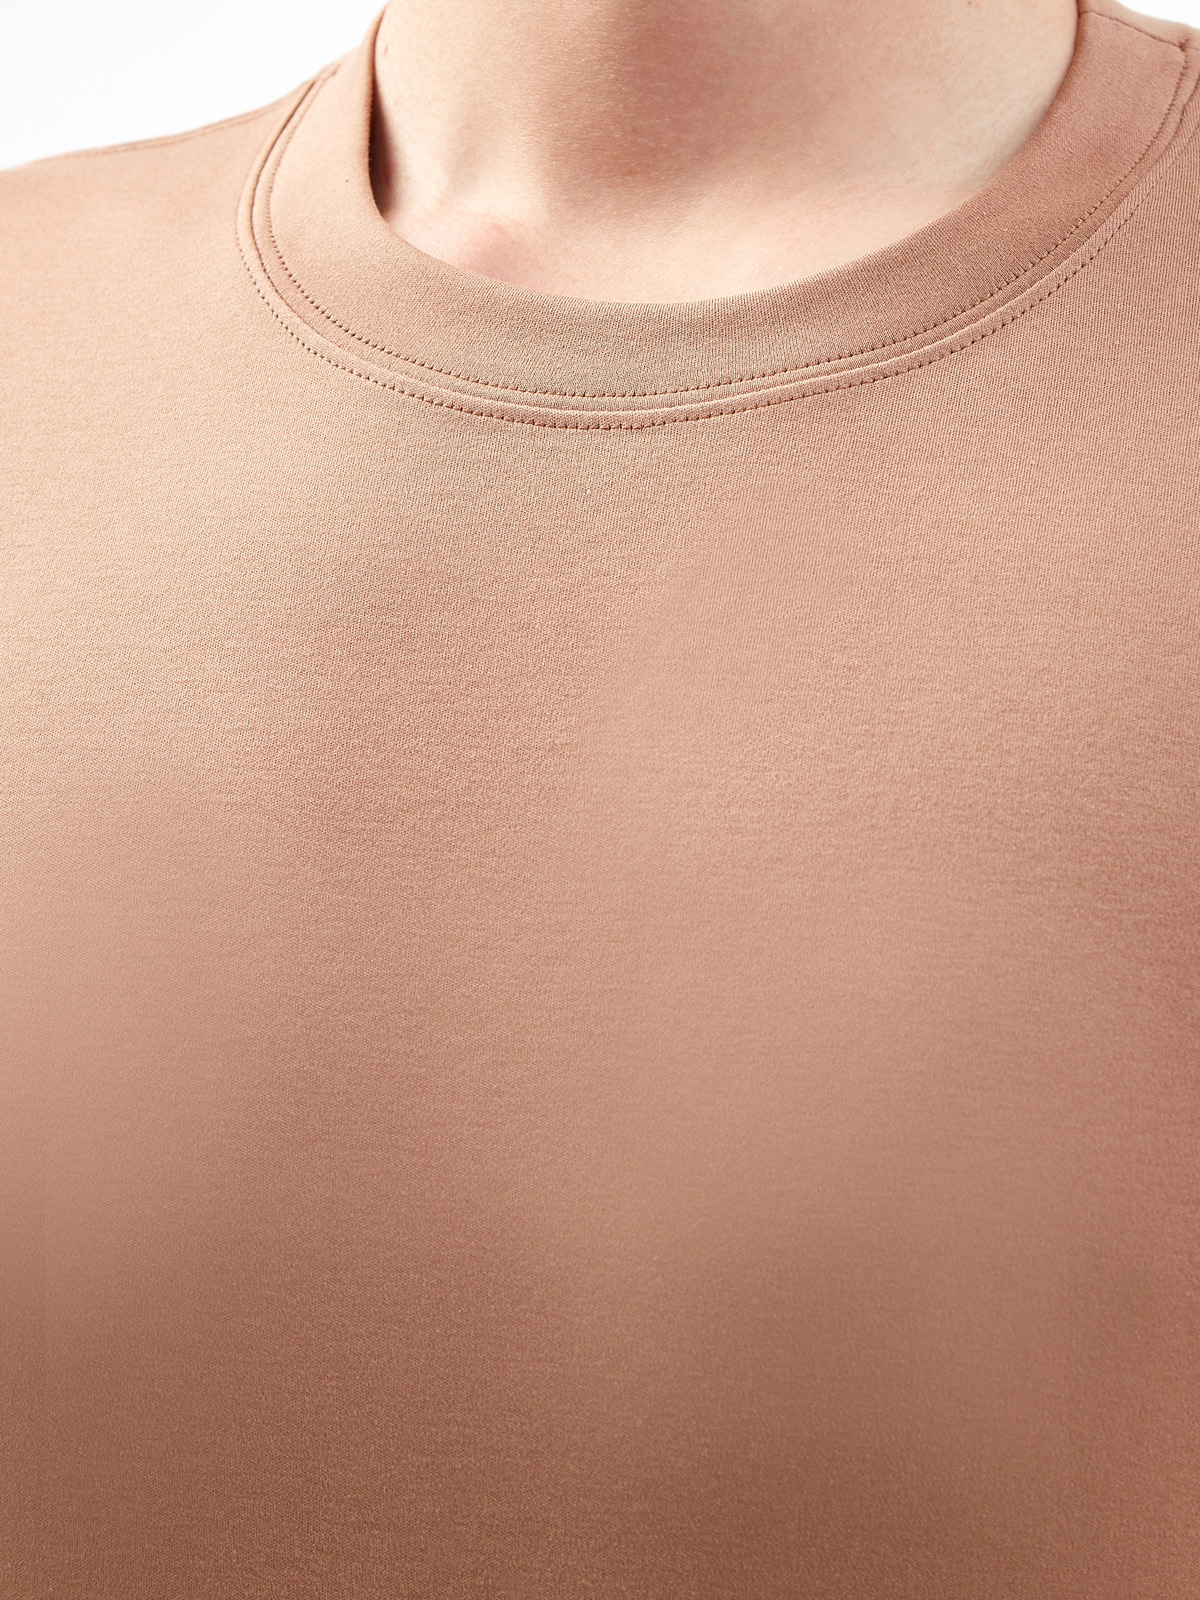 Однотонная футболка Slim Fit из мягкого джерси BRUNELLO CUCINELLI, цвет бежевый, размер 52;54;48 - фото 5